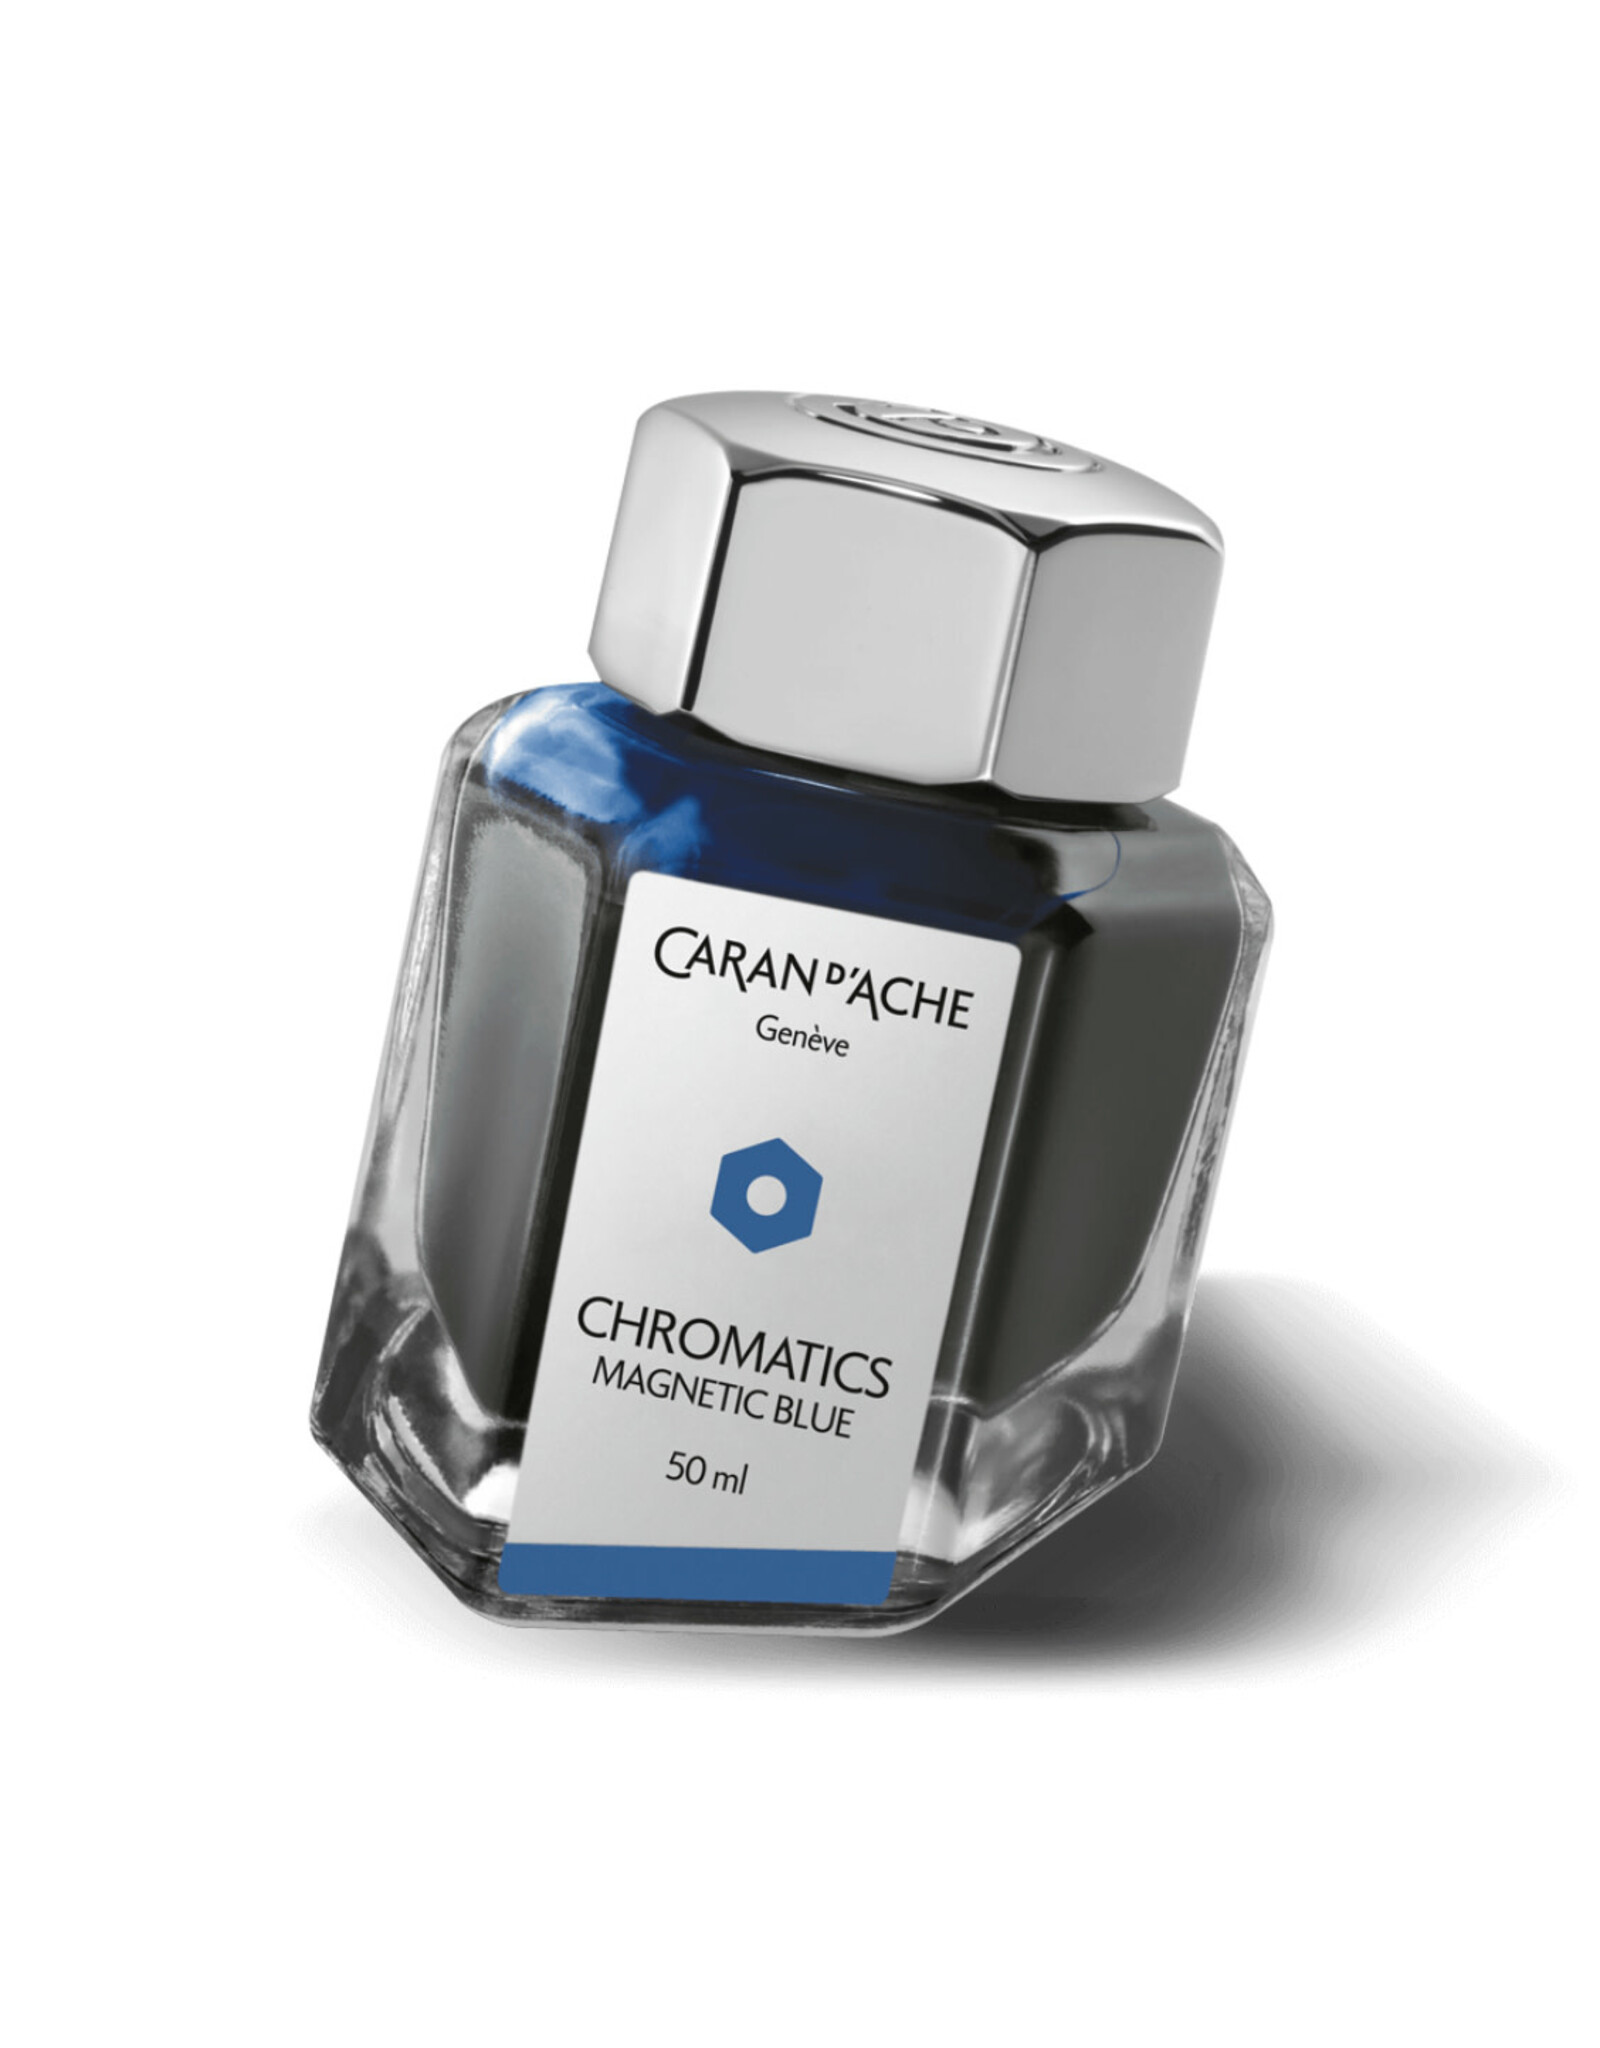 Caran d'Ache 50ml Magnetic Blue CHROMATICS Ink Bottle